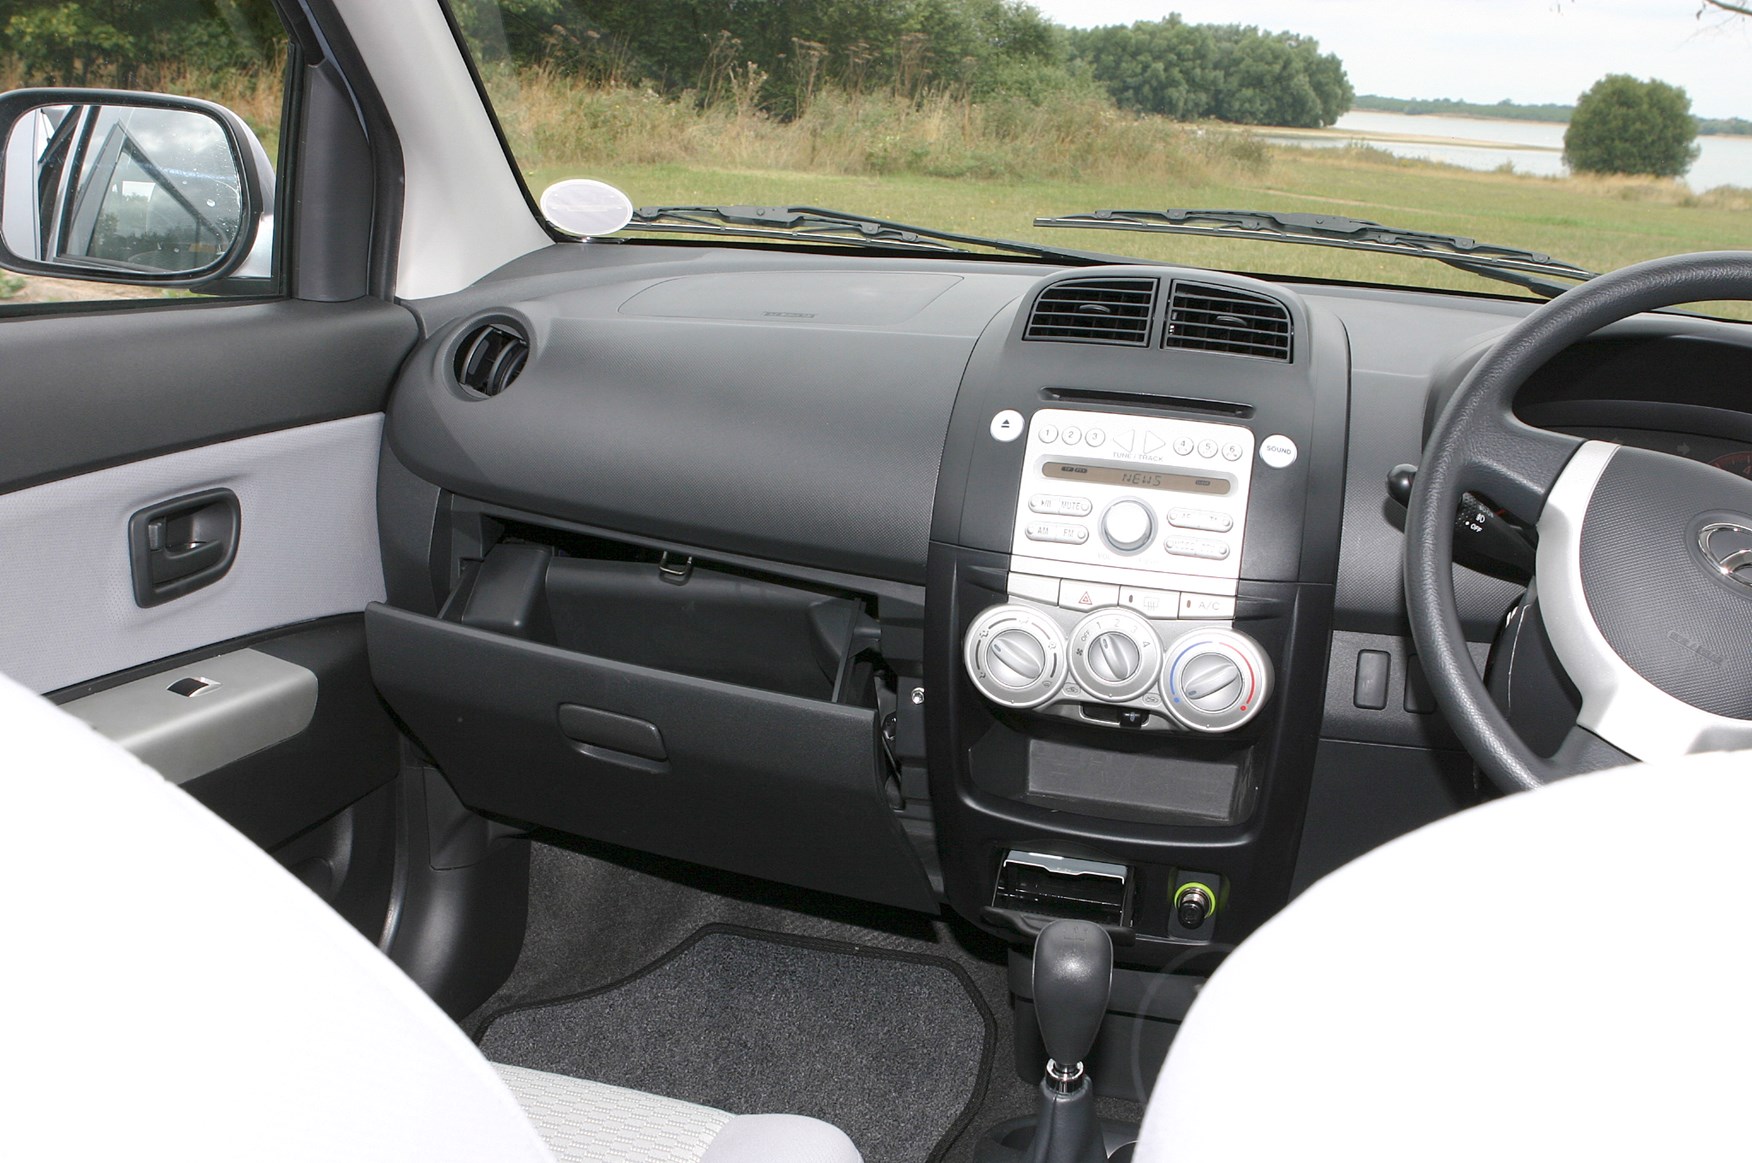 Perodua Myvi Hatchback (2006 - 2015) Features, Equipment 